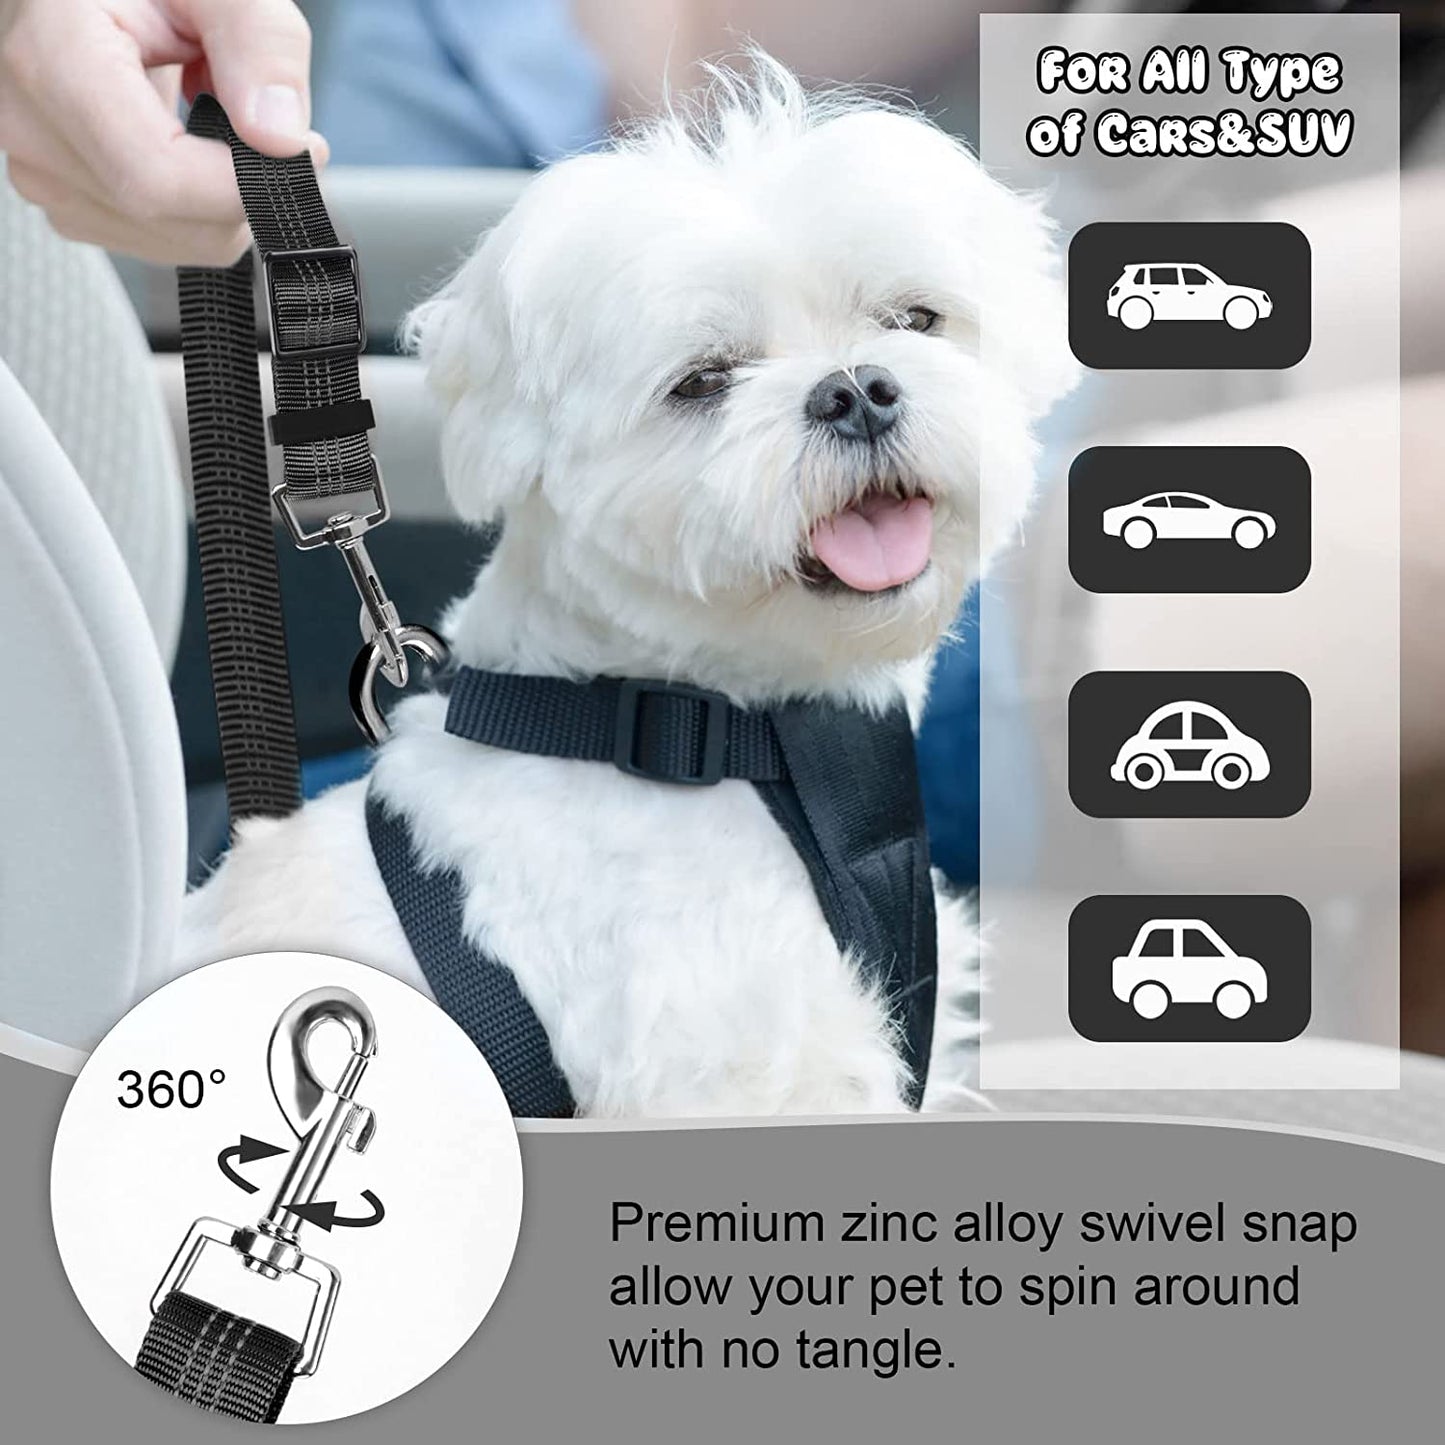 2 Packs Dog Cat Safety Seat Belt Strap Car Headrest Restraint Adjustable Nylon Fabric Dog Restraints Vehicle Seatbelts Harness